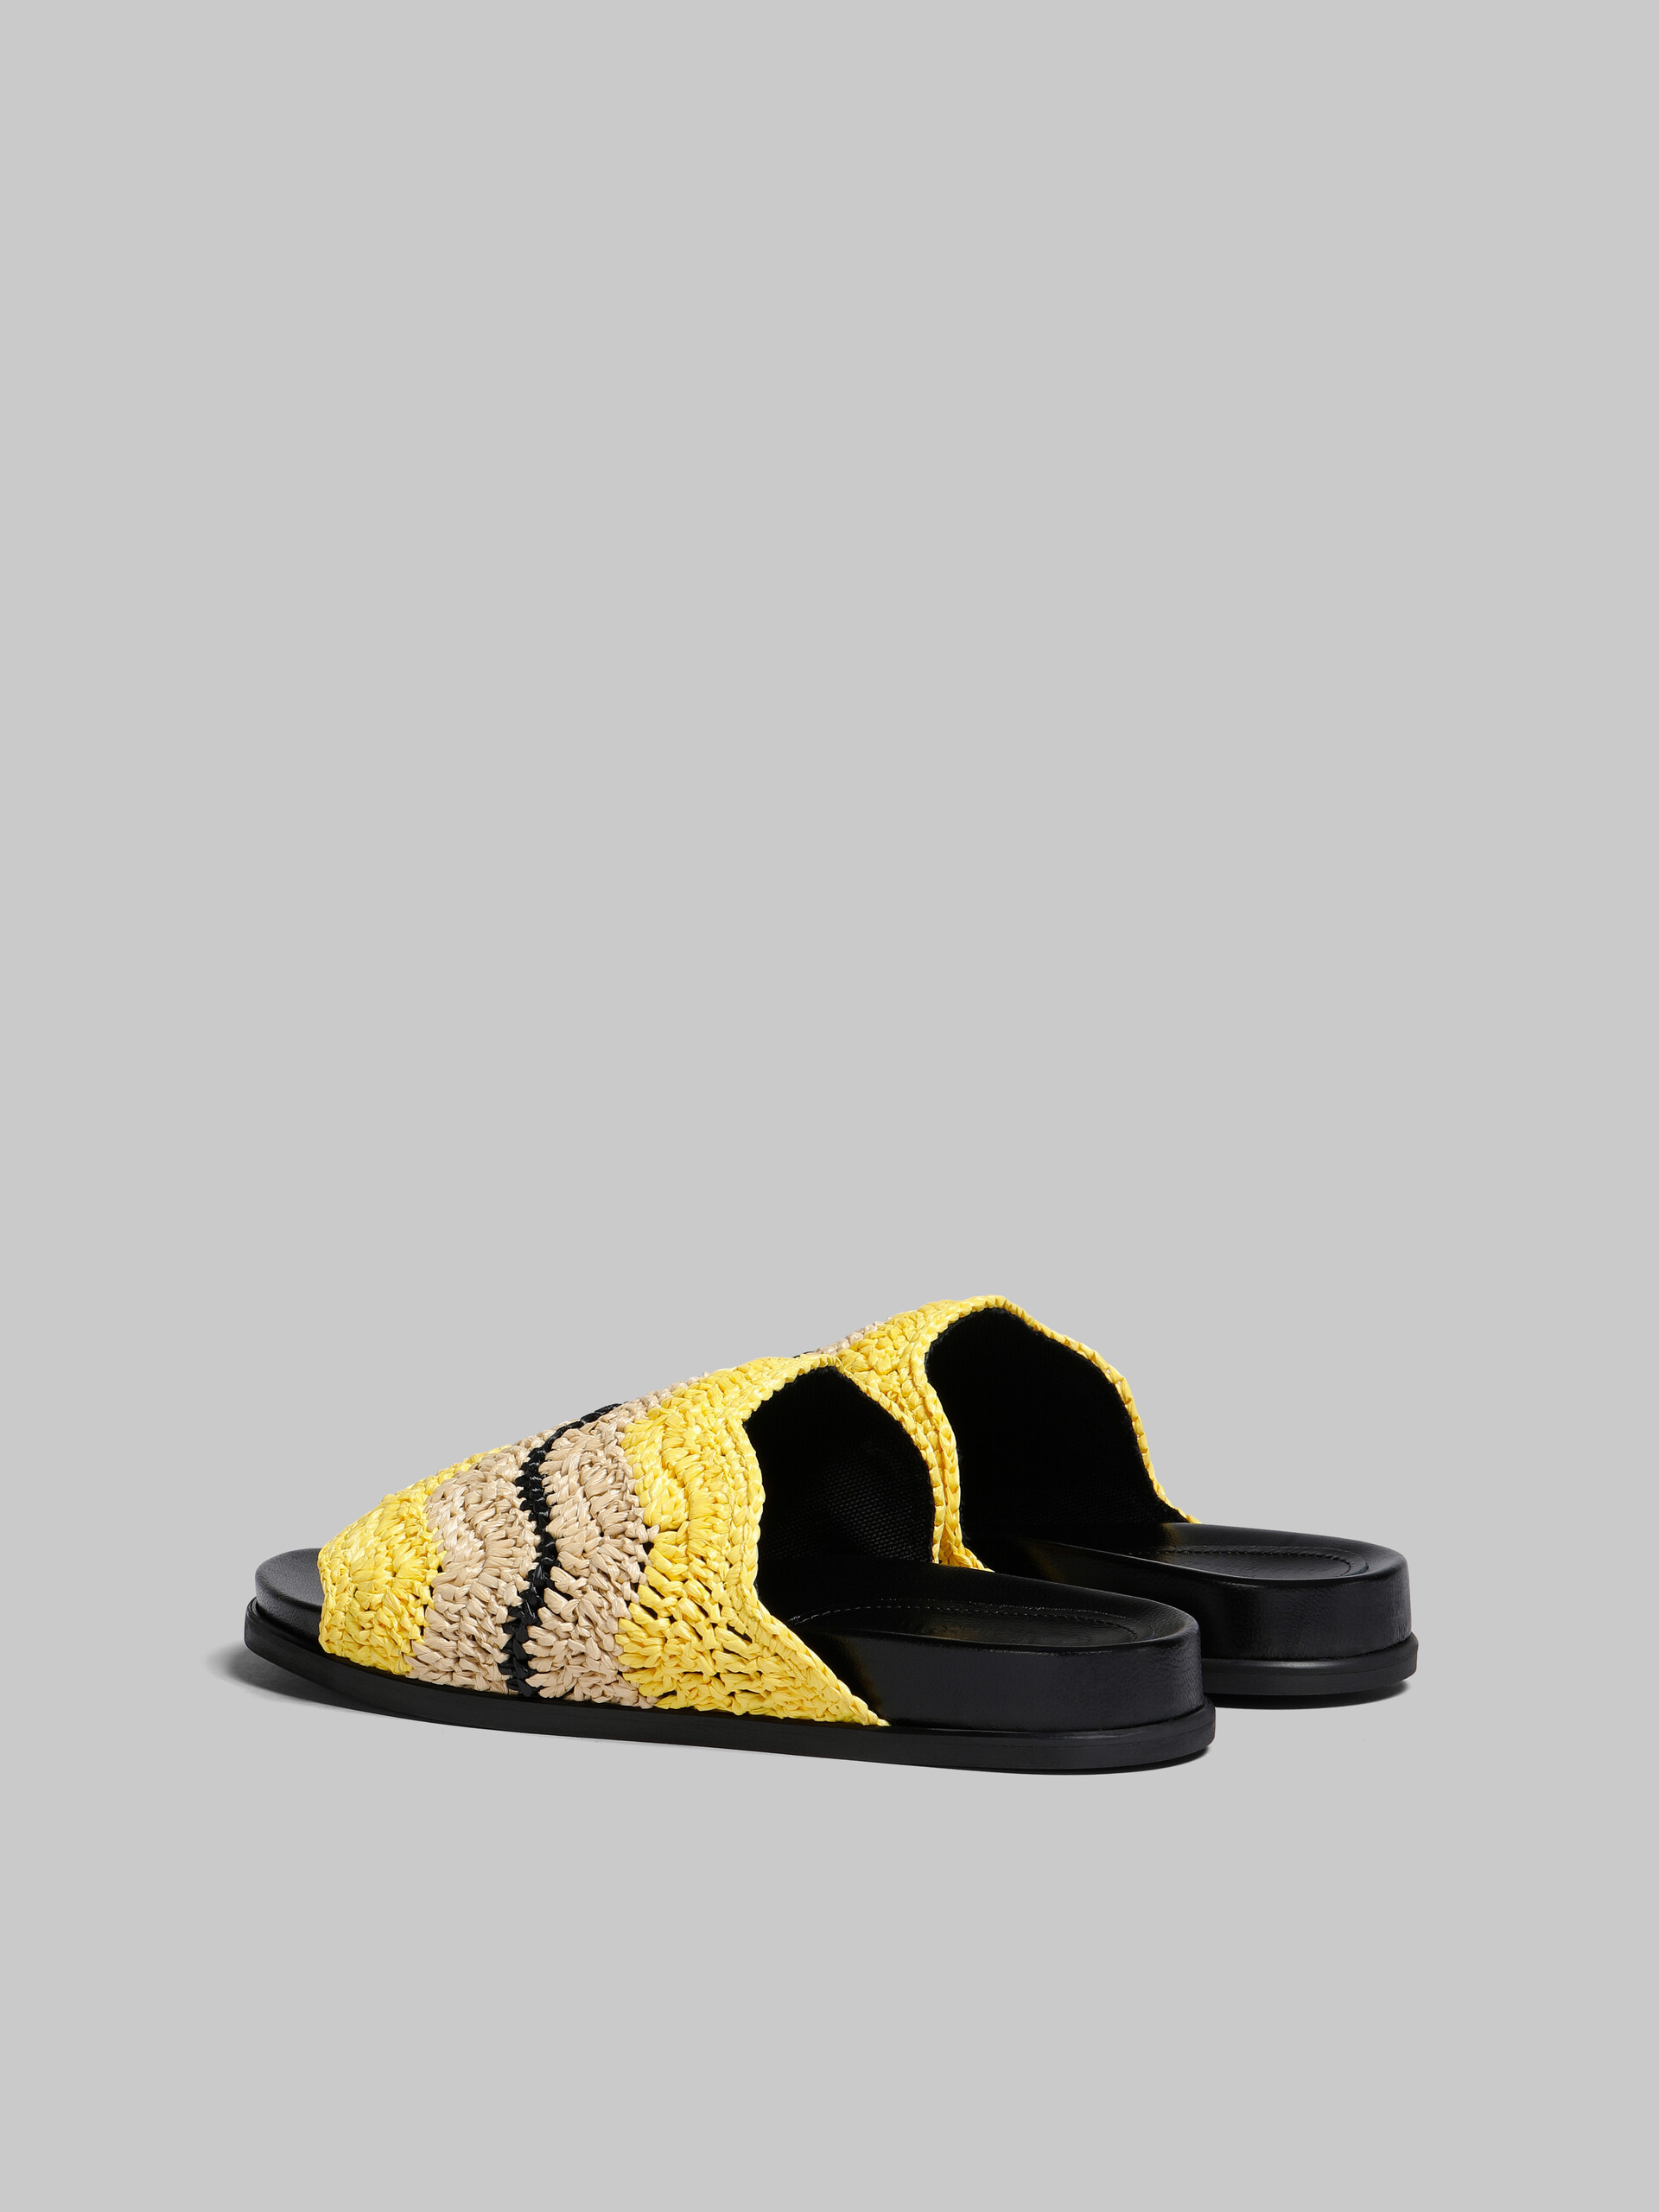 Marni x No Vacancy Inn - Yellow crochet raffia slide - Sandals - Image 3